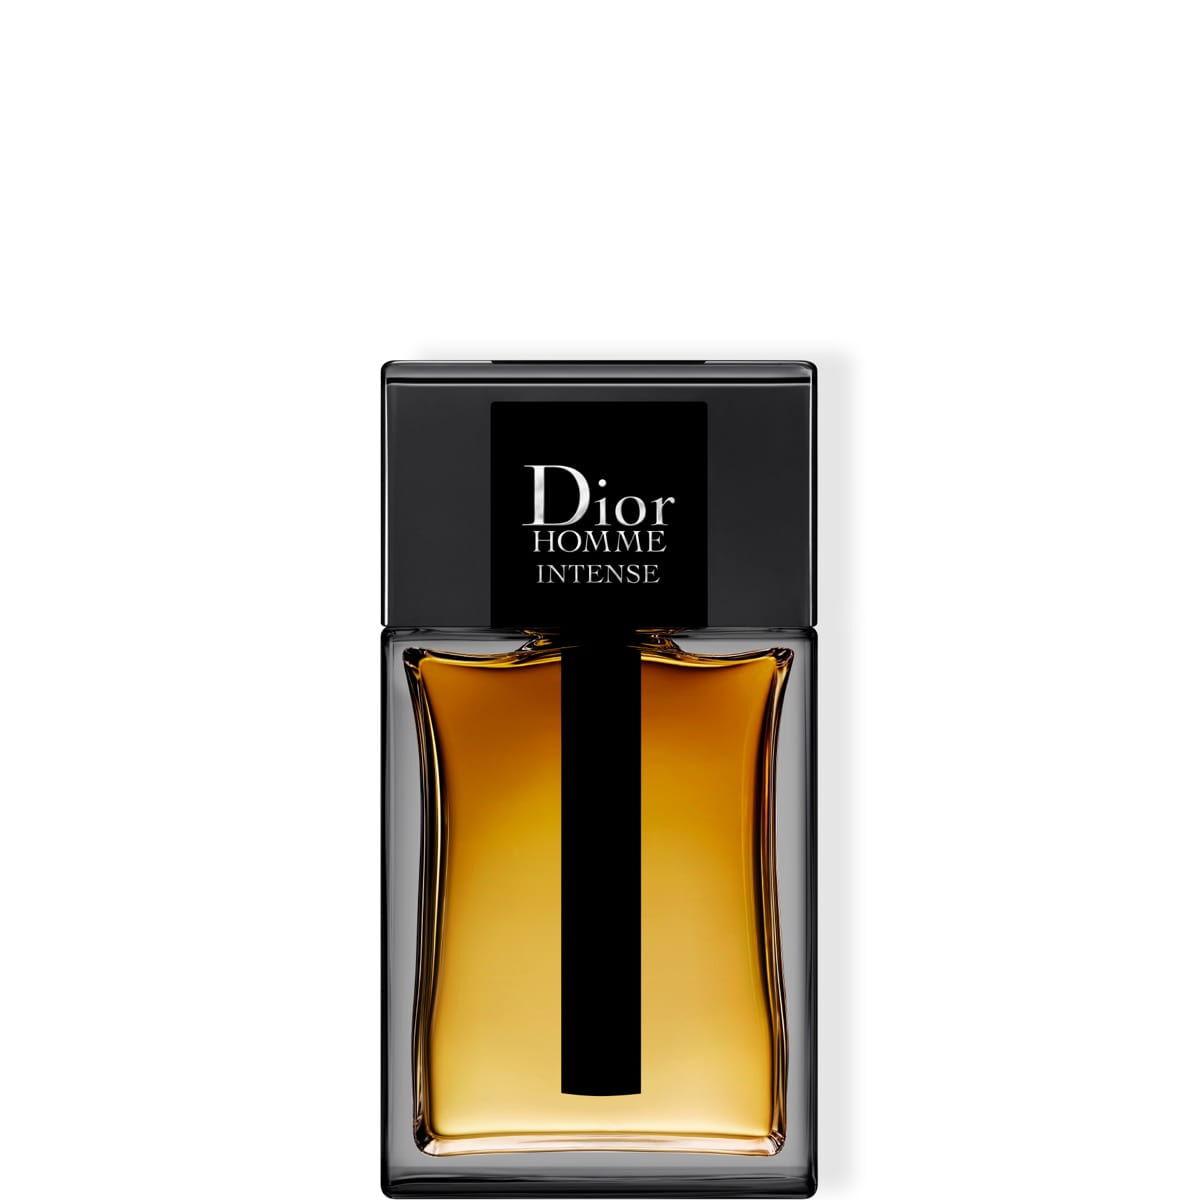 Dior Homme Intense HerHim Perfume